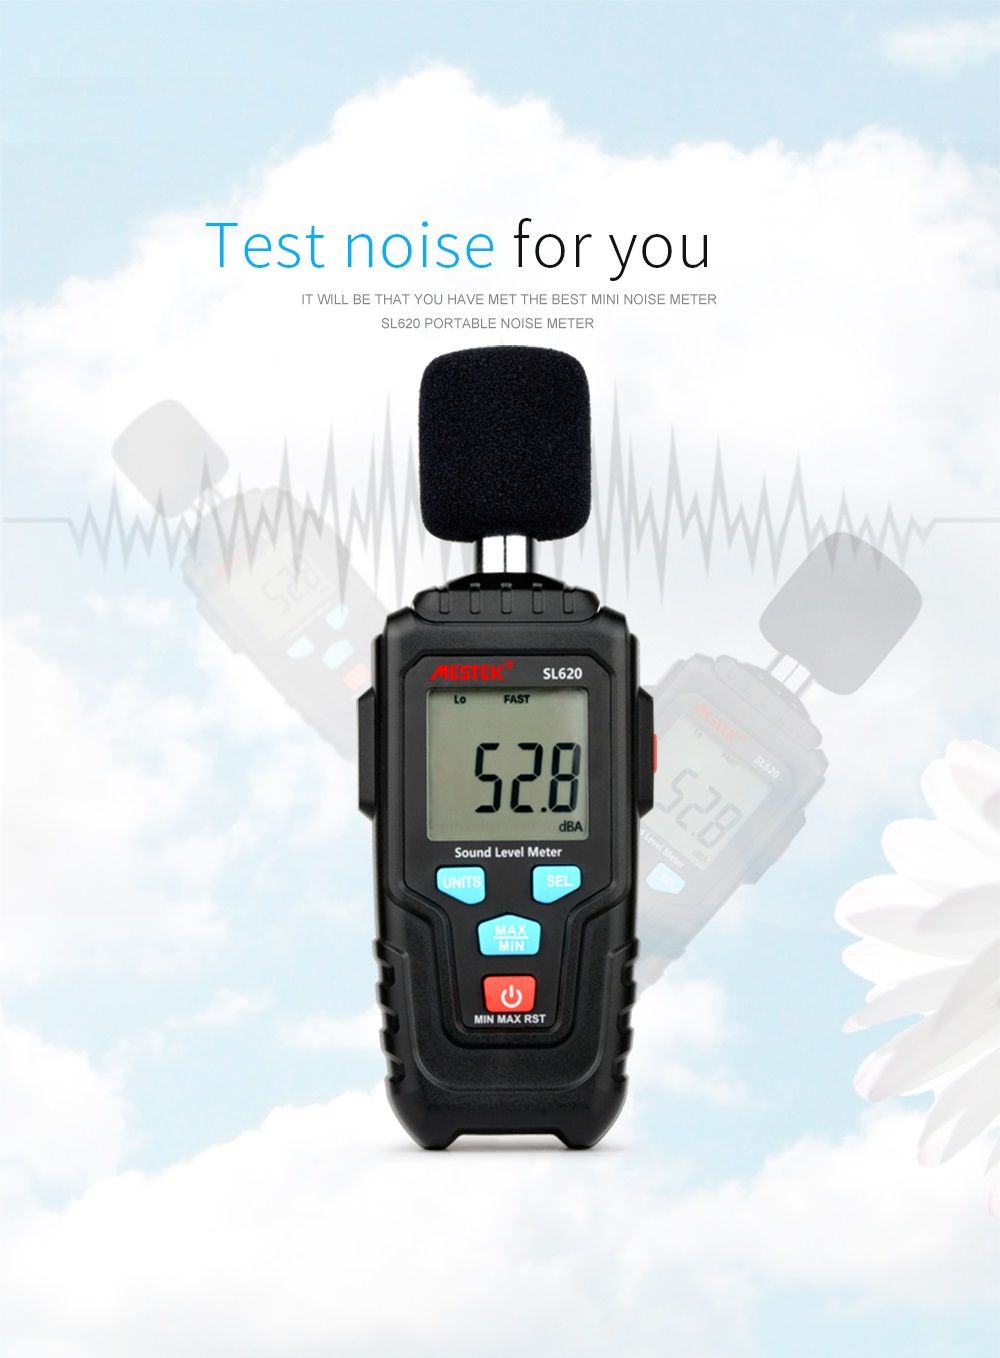 MESTEK-SL620-Decibel-Meter-Audio-Level-Meter-Logger-30-135dB-Noise-Measurement-Sound-Level-Meter-Det-1709064